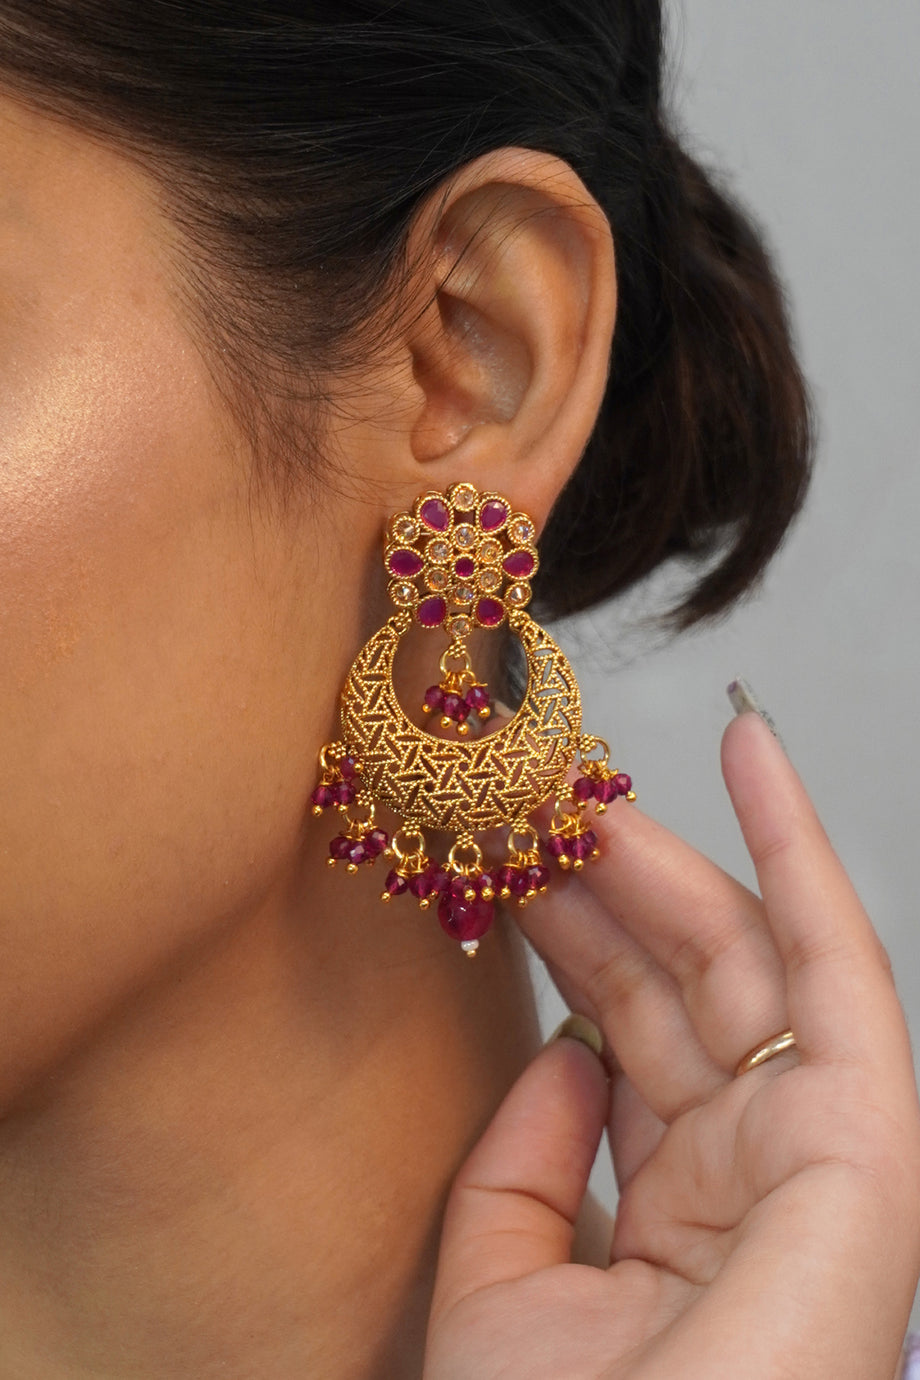 Gold earrings designs